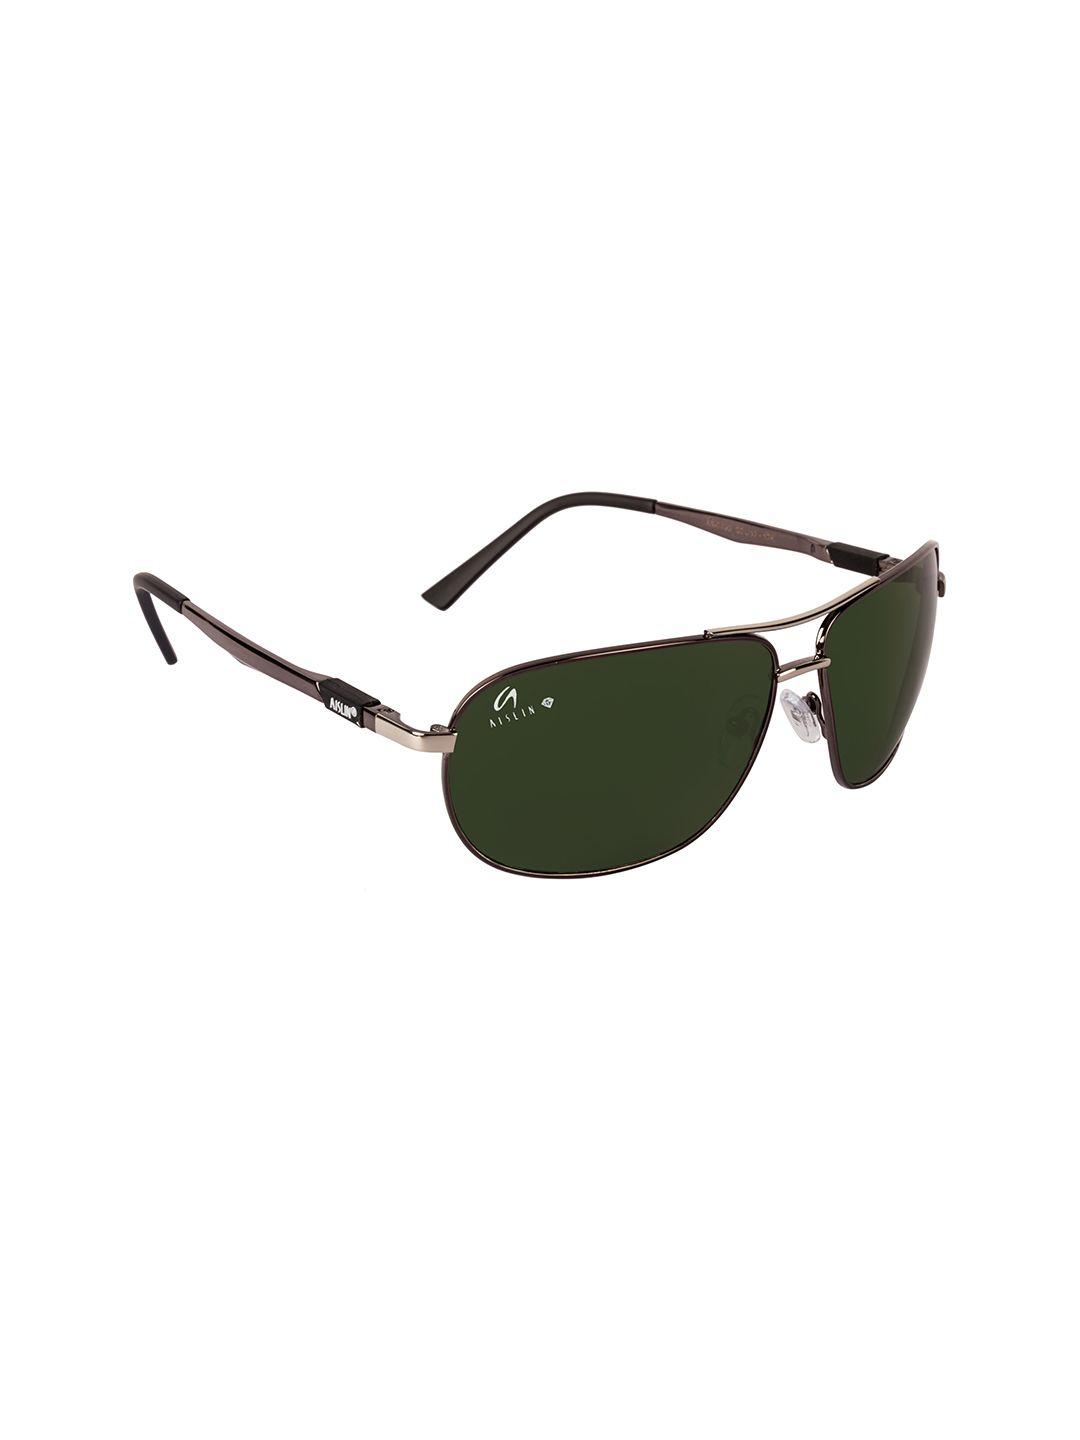 aislin men green lens wayfarer sunglasses with uv protected lens-14309-55-as-3492